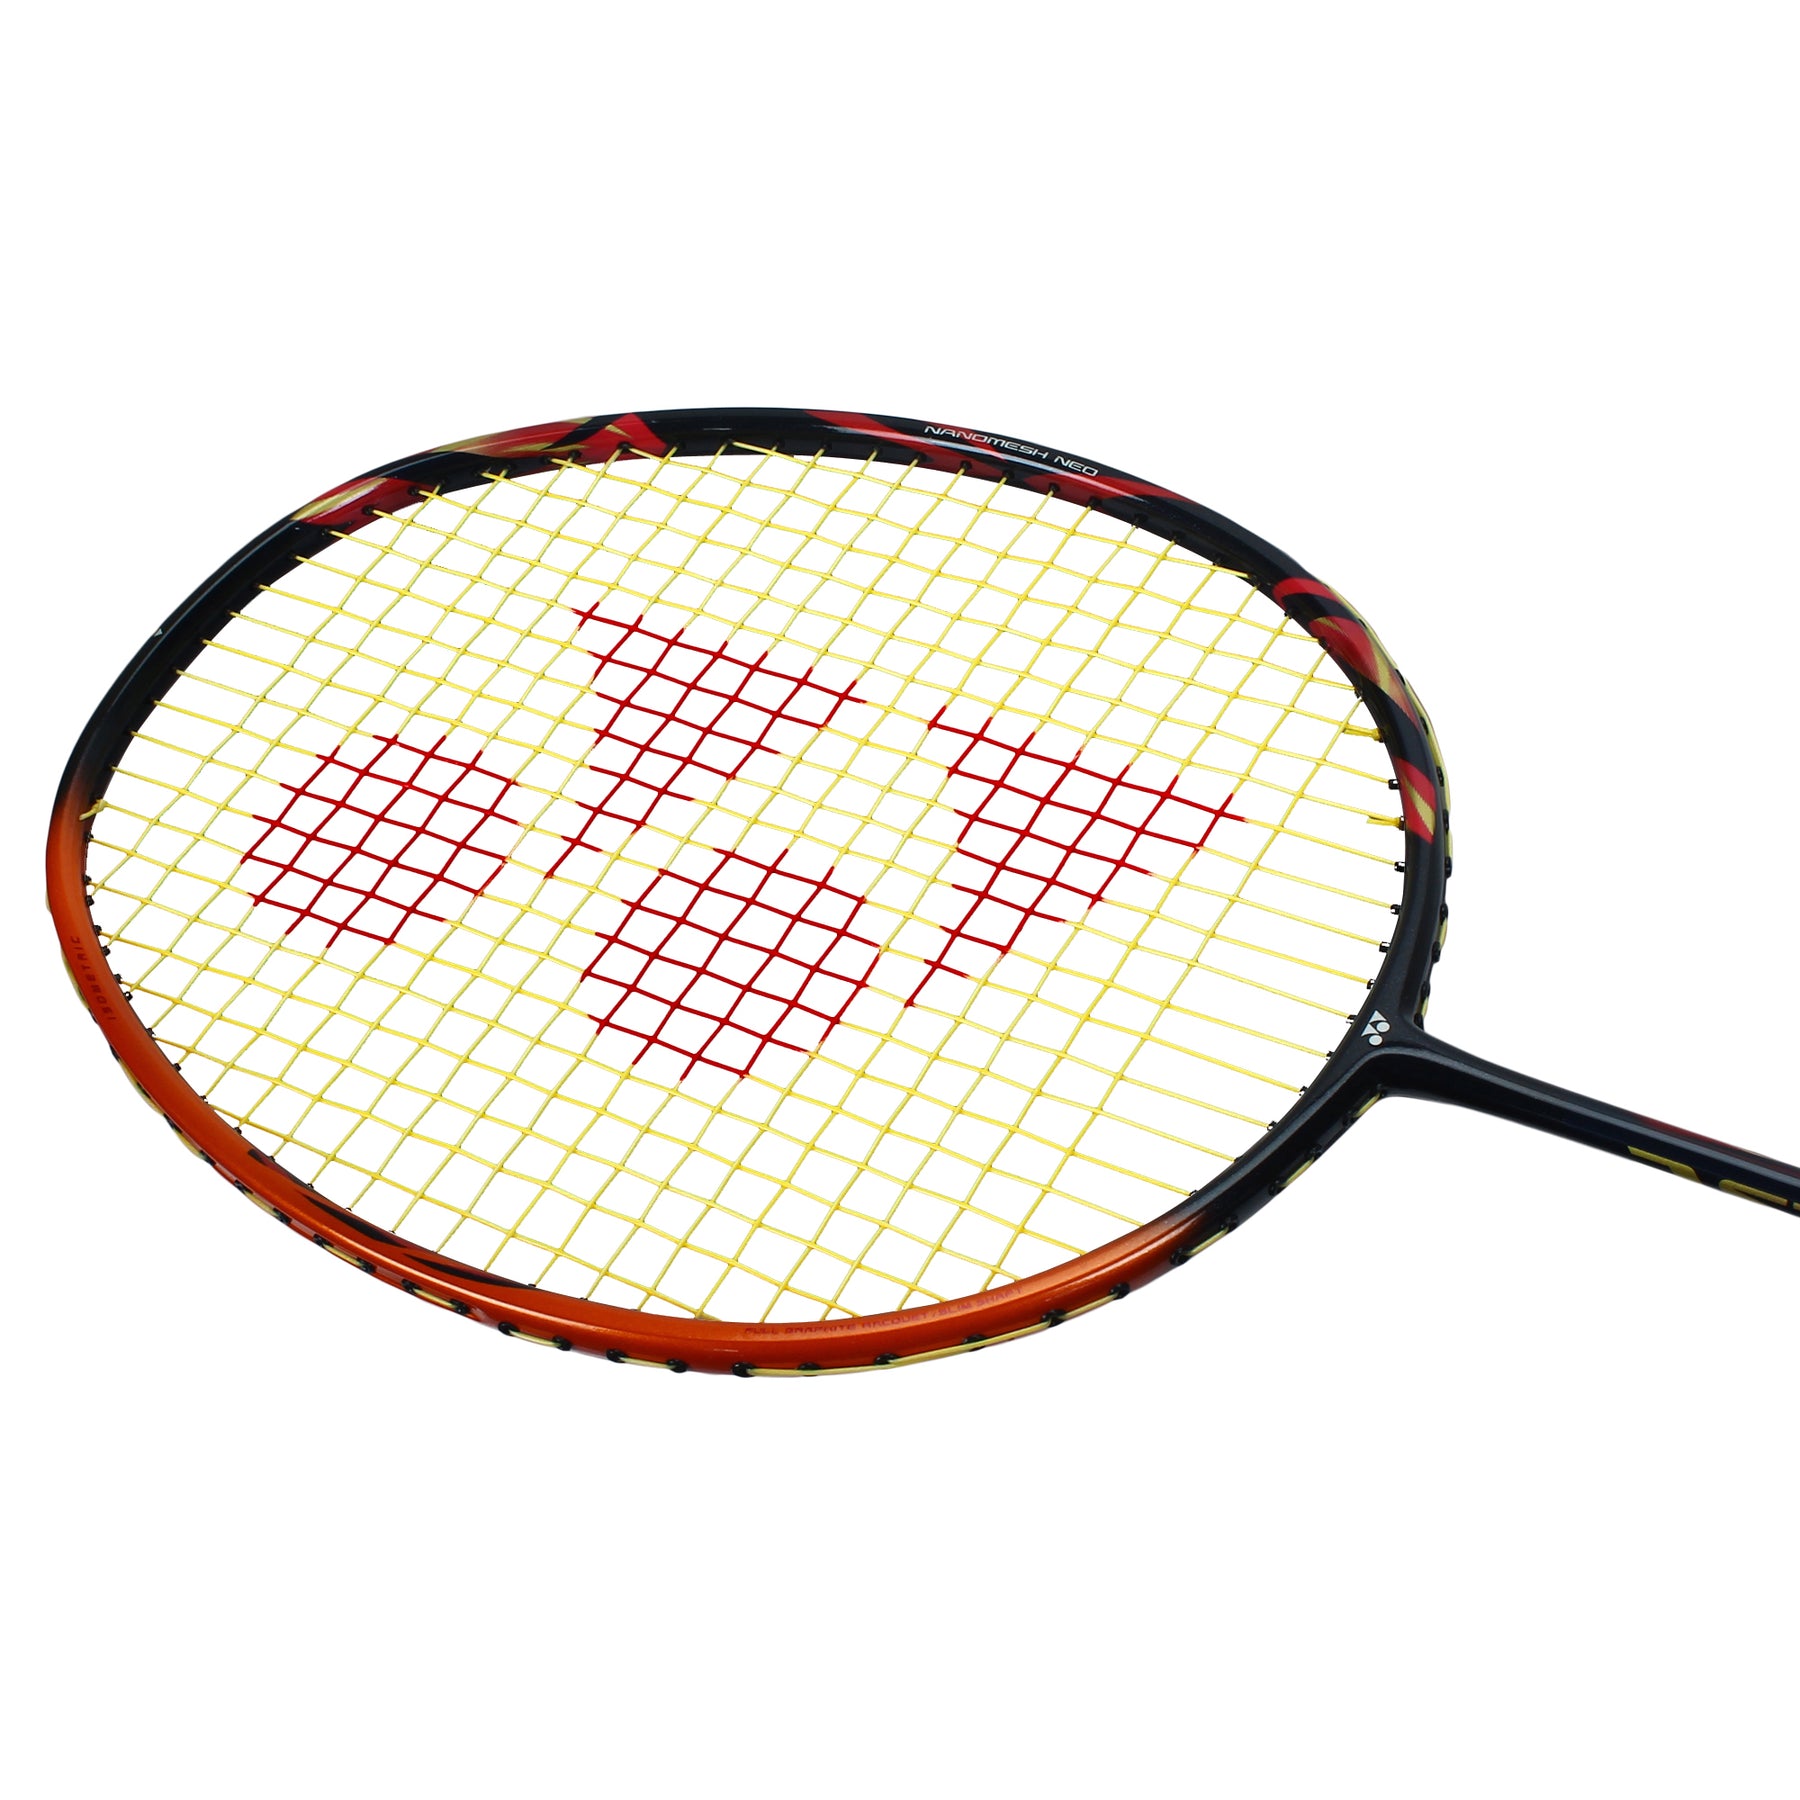 Buy Yonex Astrox 39 Racket at Best Price Genuine Product Guarantee